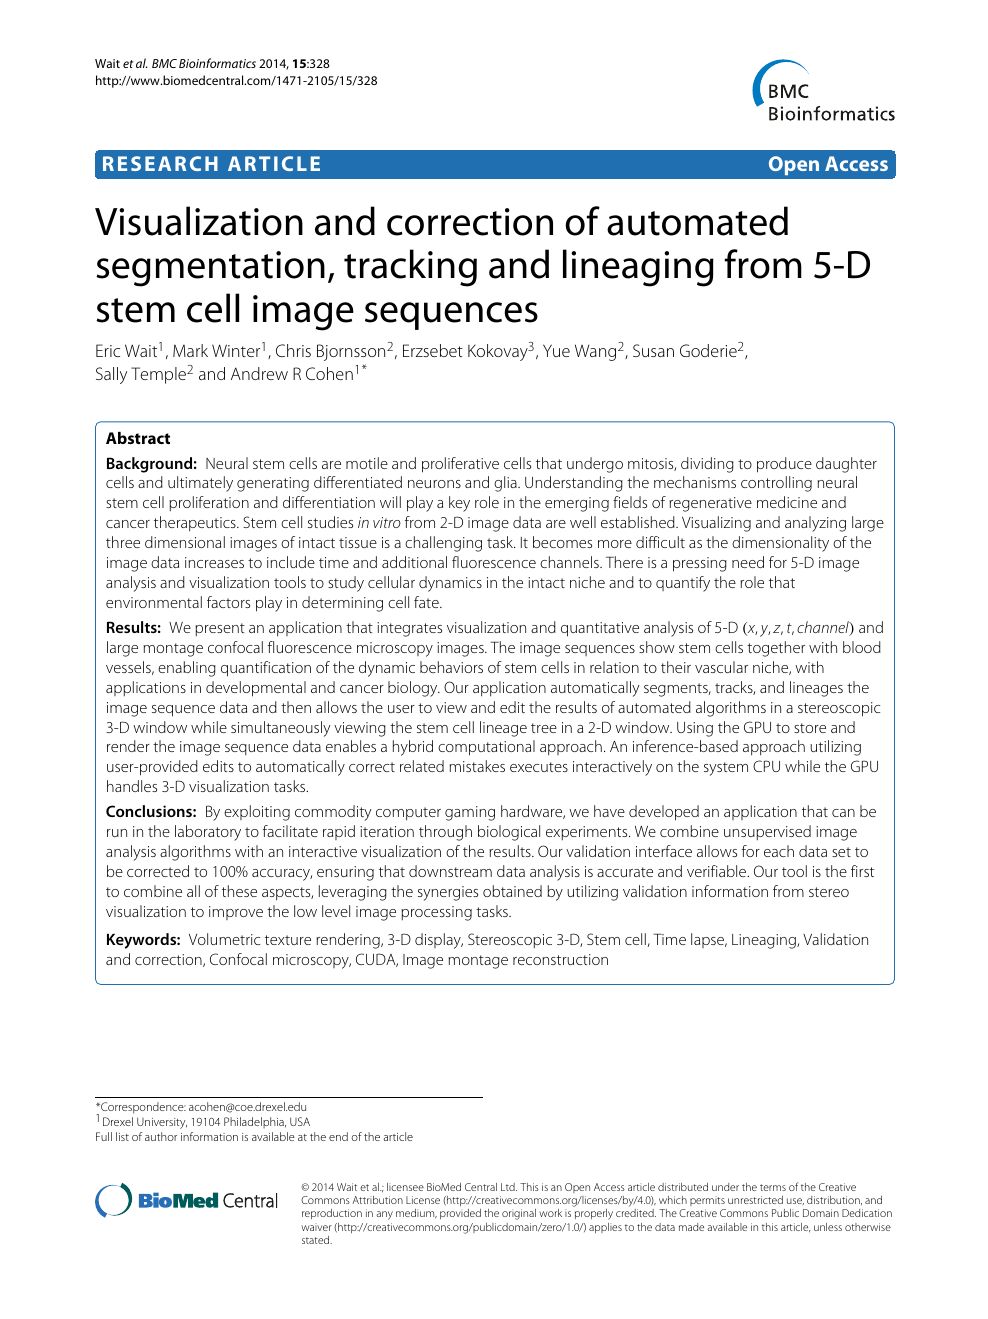 Visualization And Correction Of Automated Segmentation